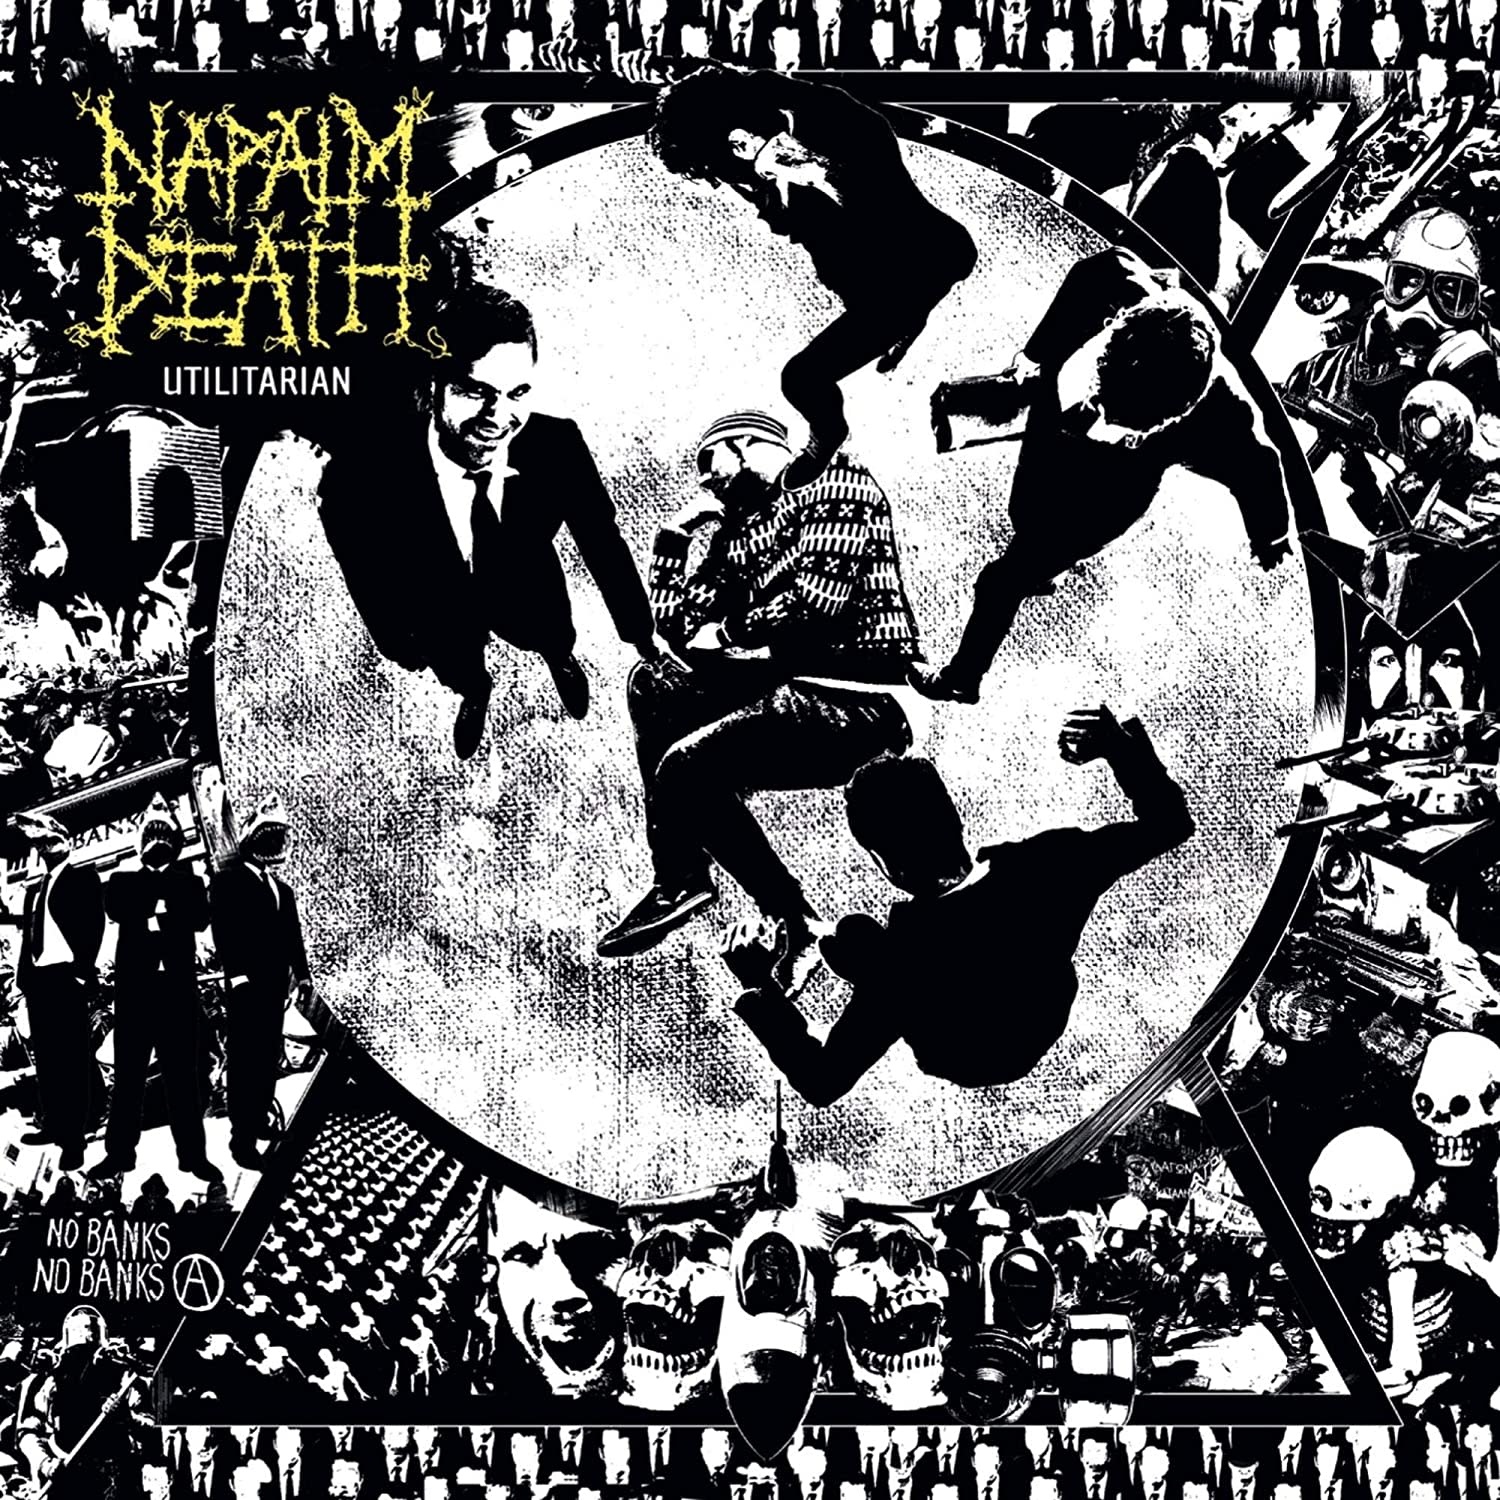 Metal Napalm Death - Utilitarian